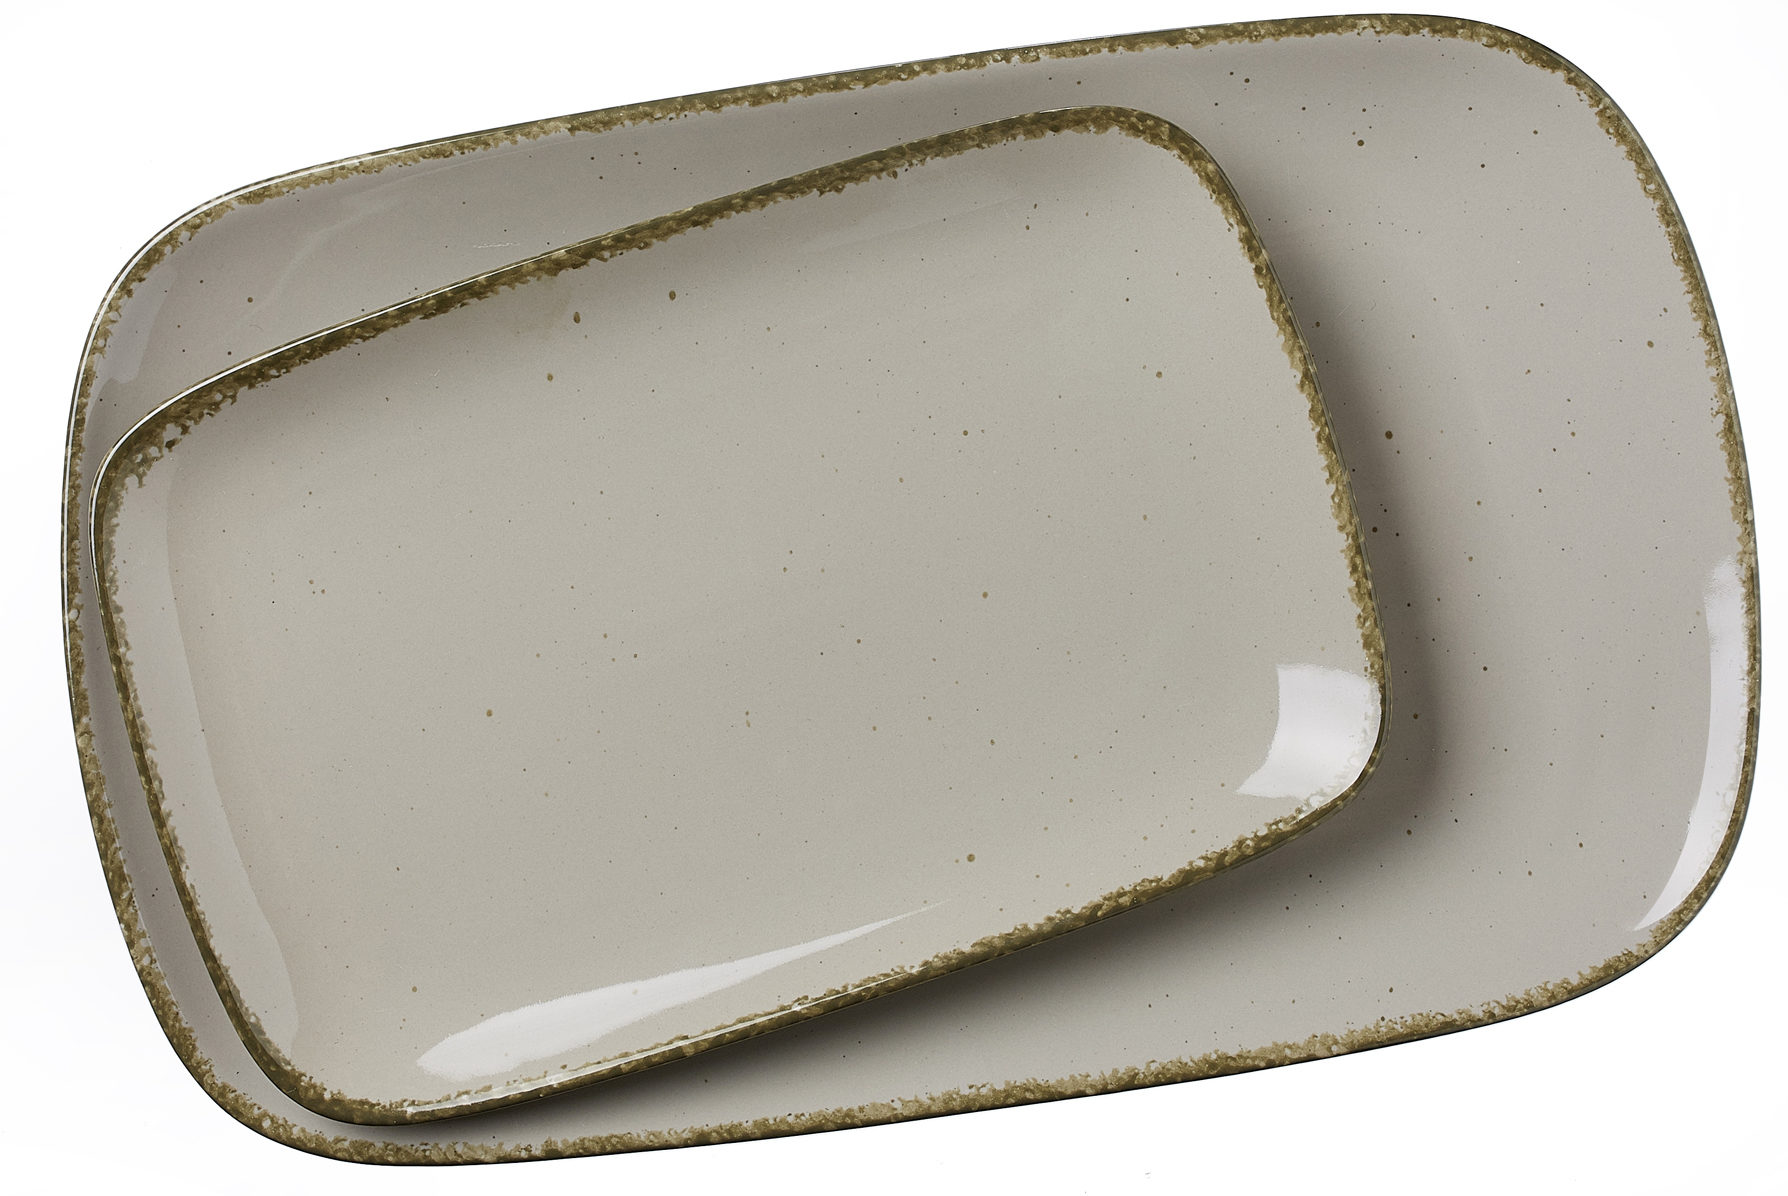 Tafelservice Ritzenhoff & breker aus Porzellan in Grau Servierplatten Casa graues Porzellan - 2-teilig, Platten